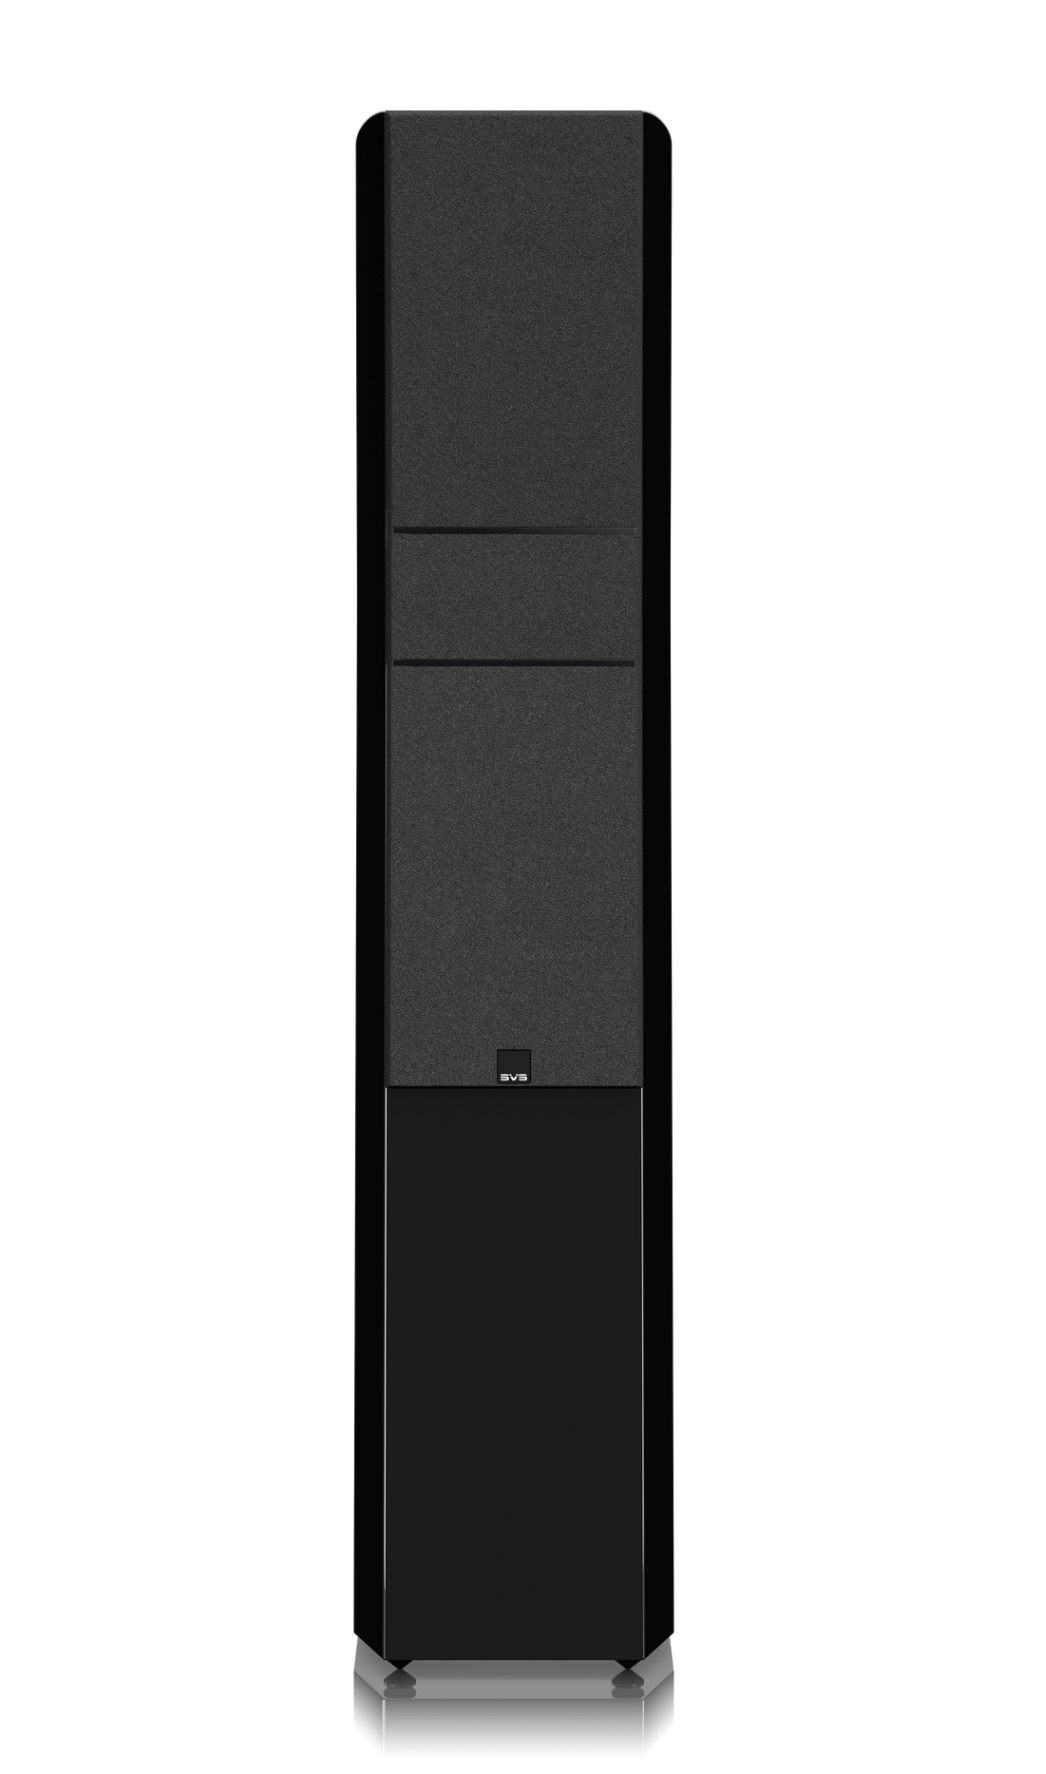 SVS Ultra Evolution Titan Floorstanding Speaker in Piano Black Oak, with grille